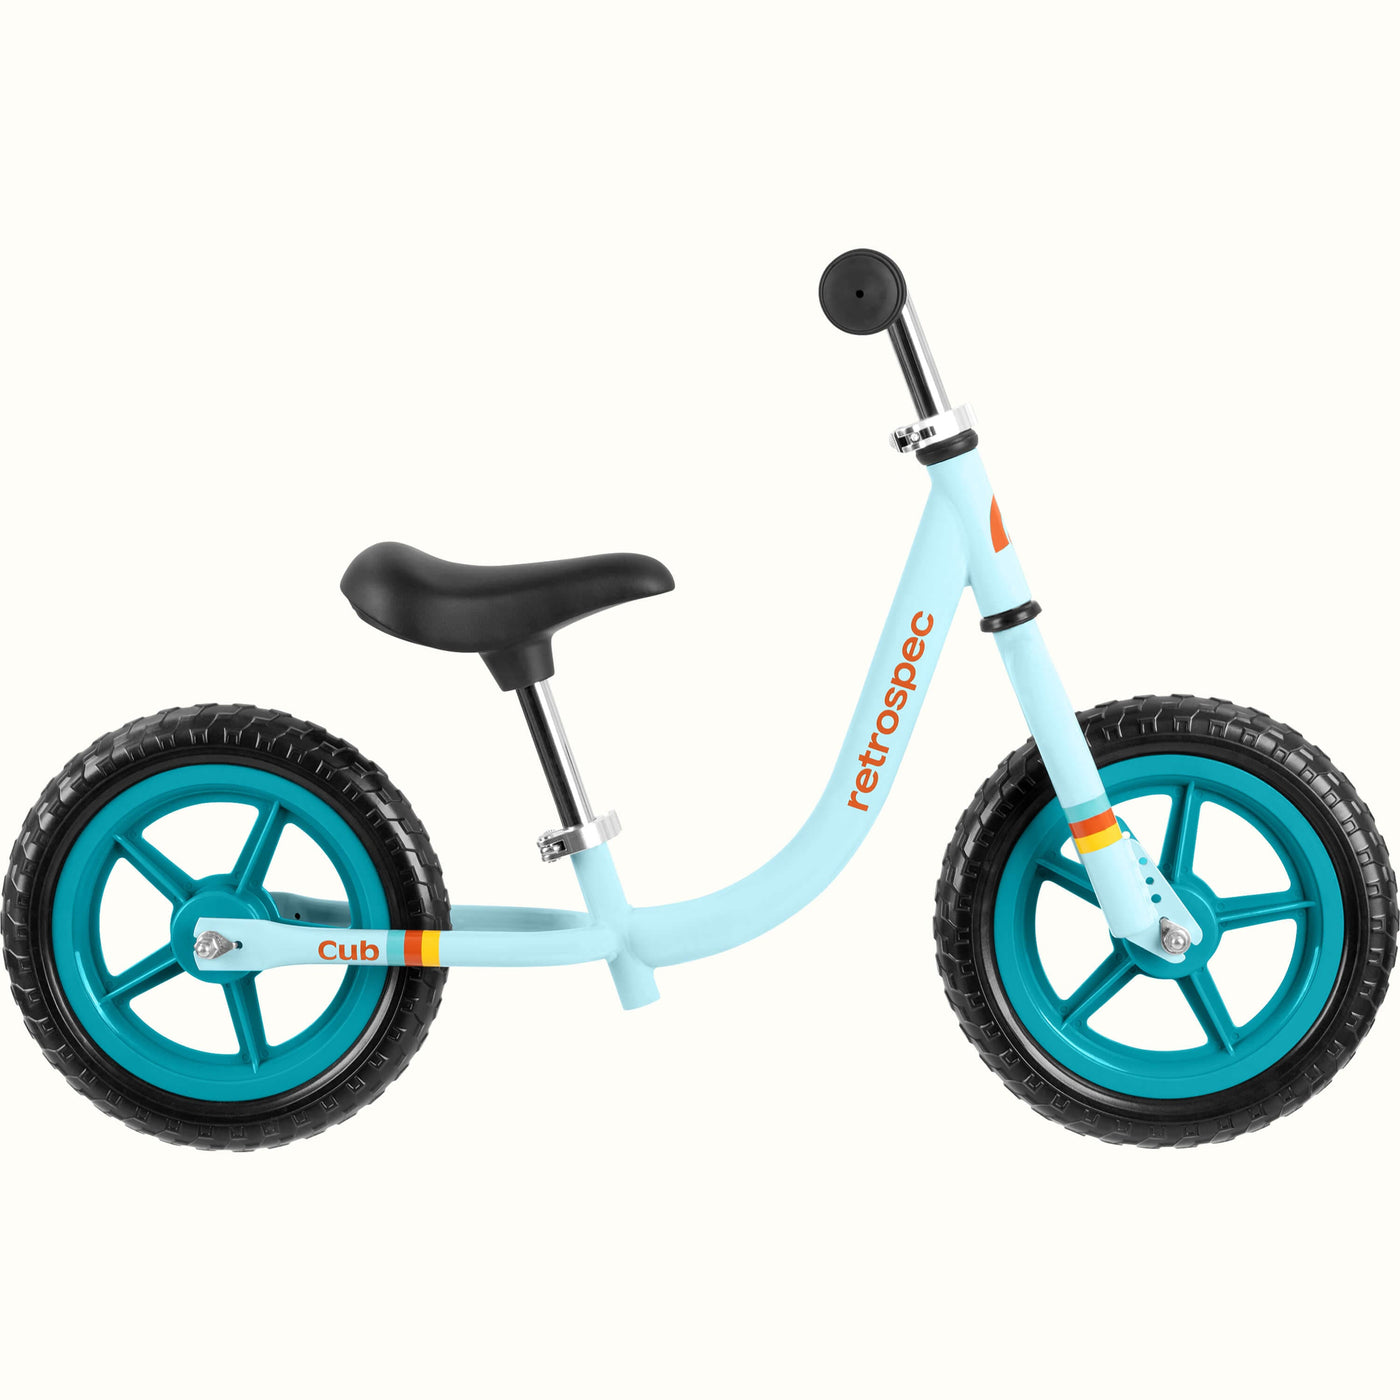 Cub 2 Kids’ Balance Bike (18 months-4 years) | Powder Blue